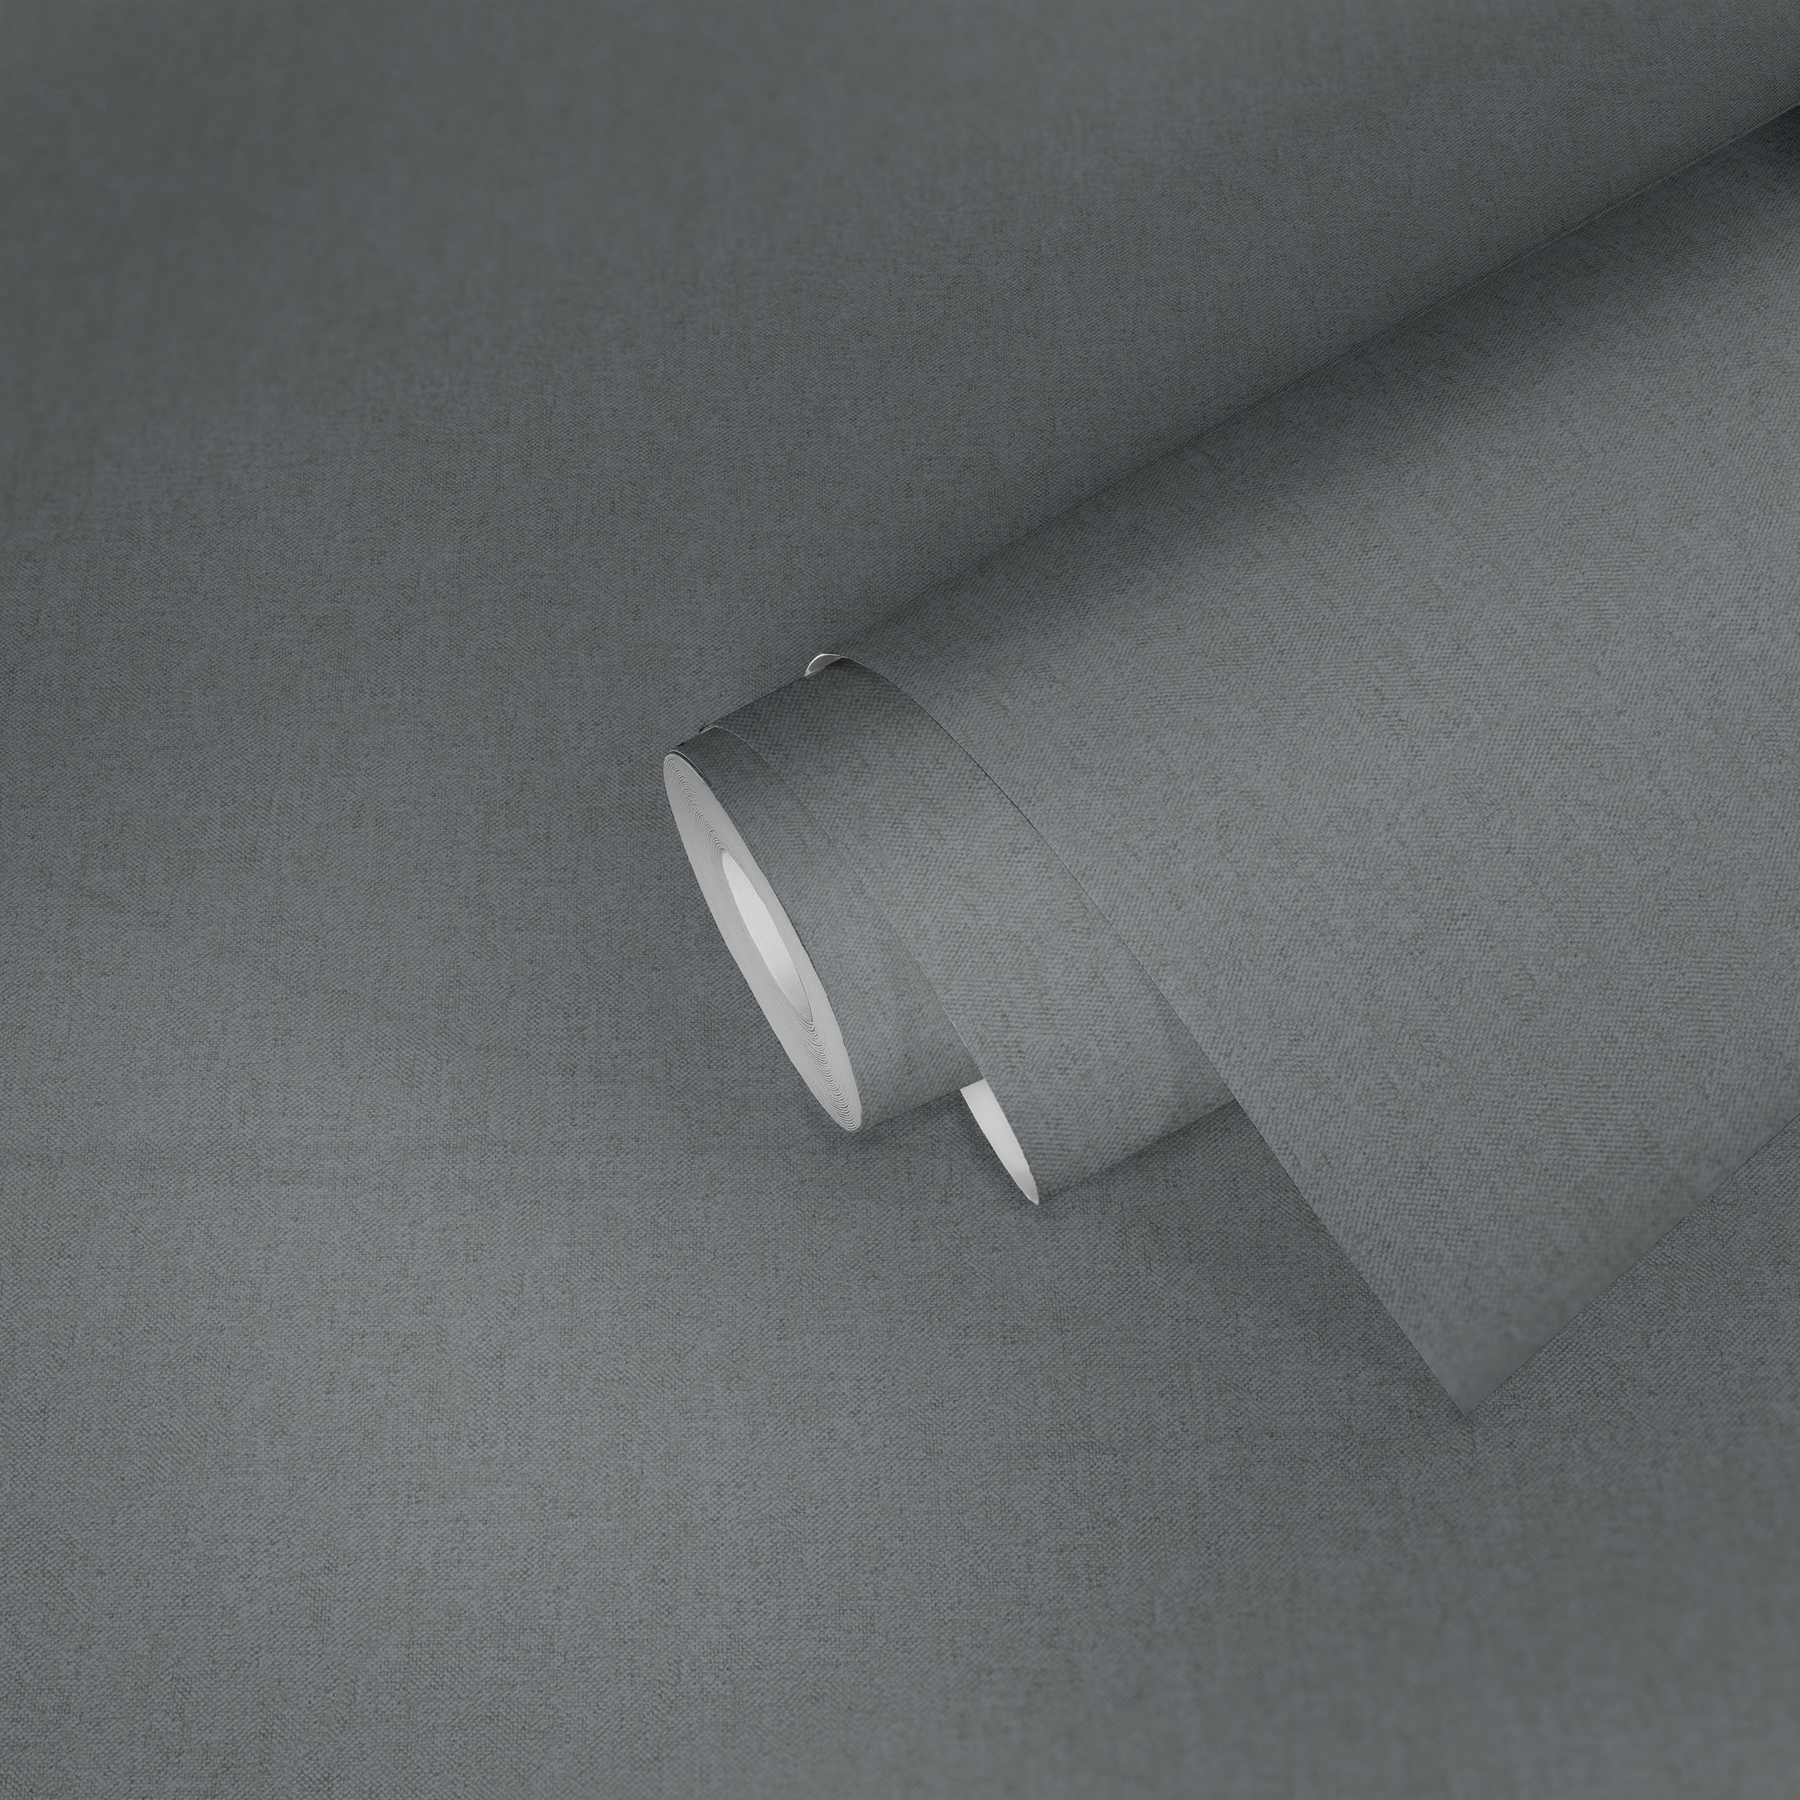             Textiloptik Tapete Grau Loden mit Strukturmuster
        